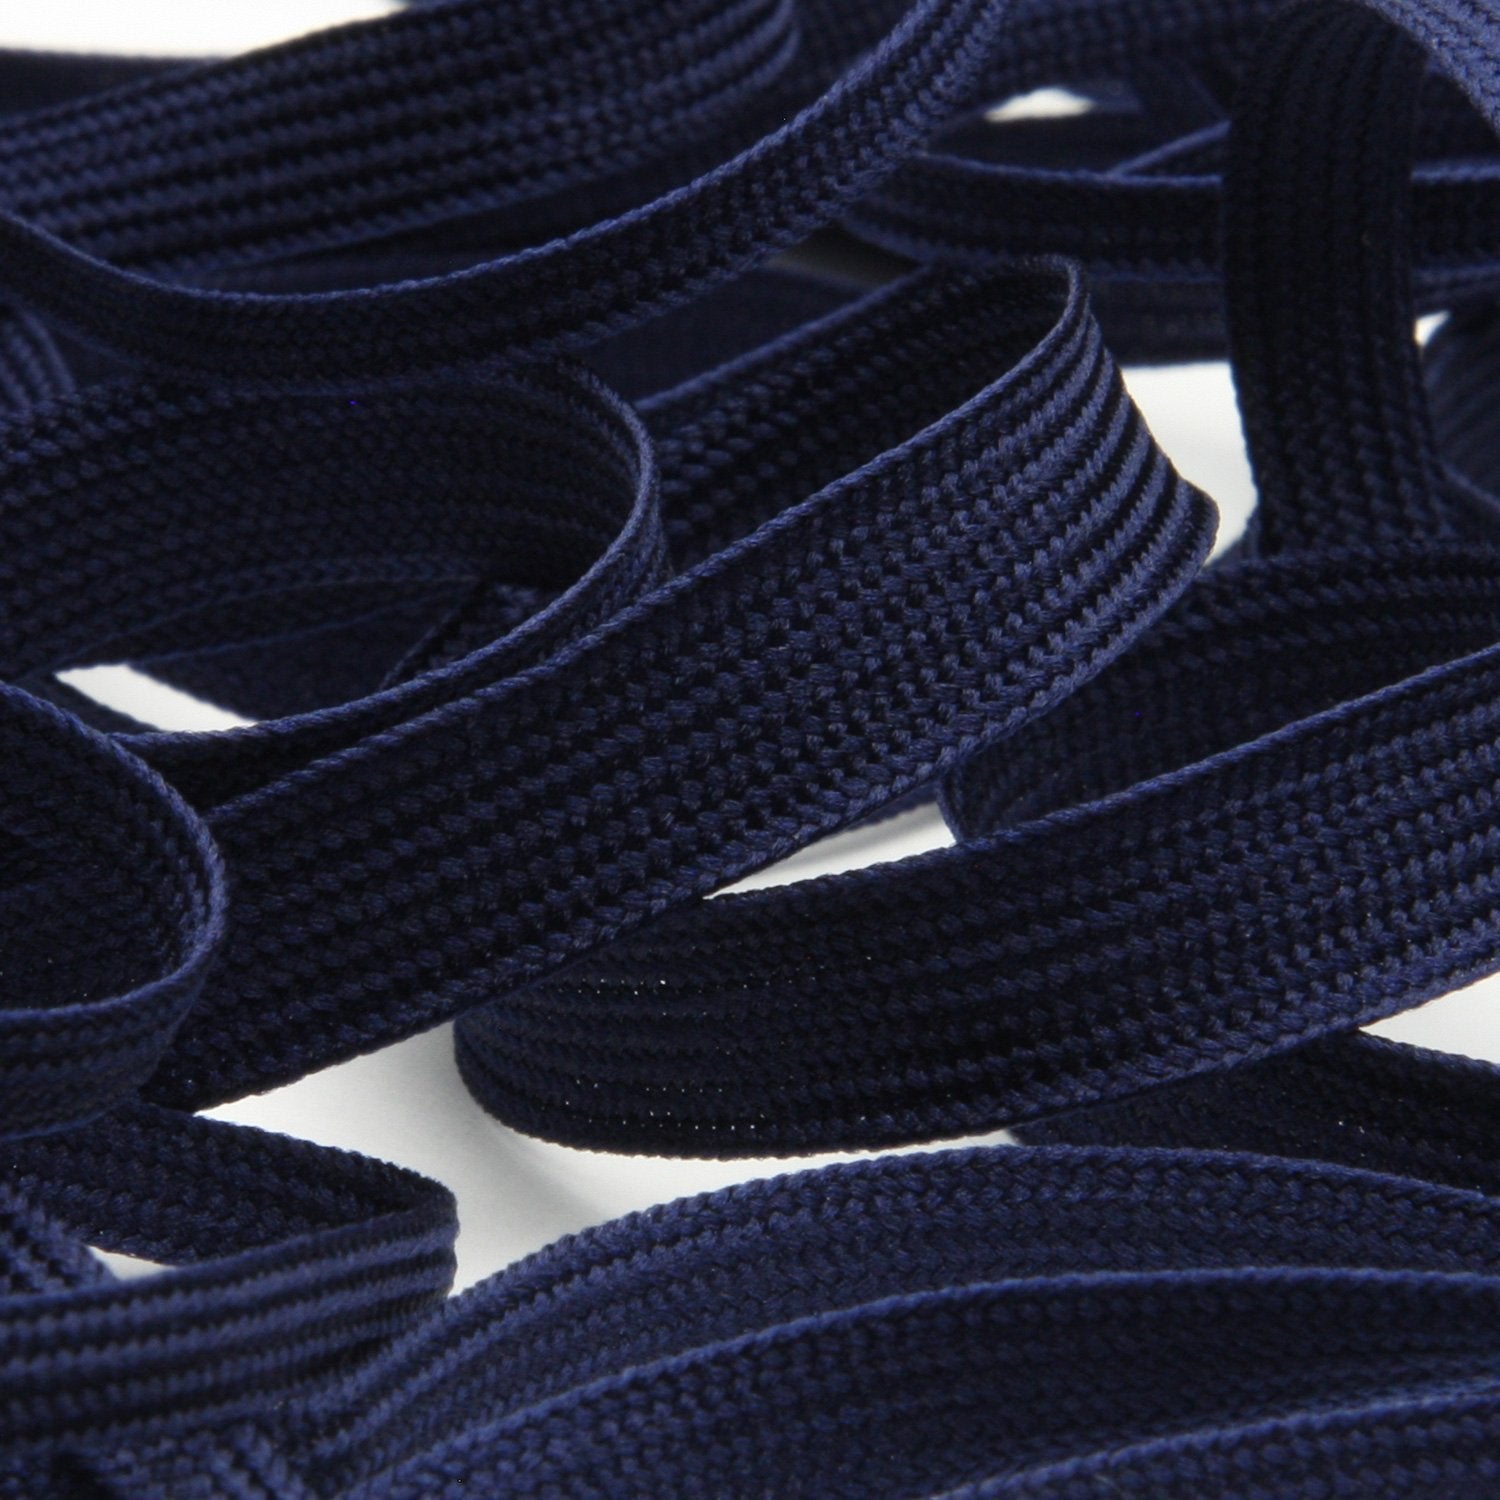 Blue Navy Braid Fringe Trims1.8cm - 0.71 inches gimp braid